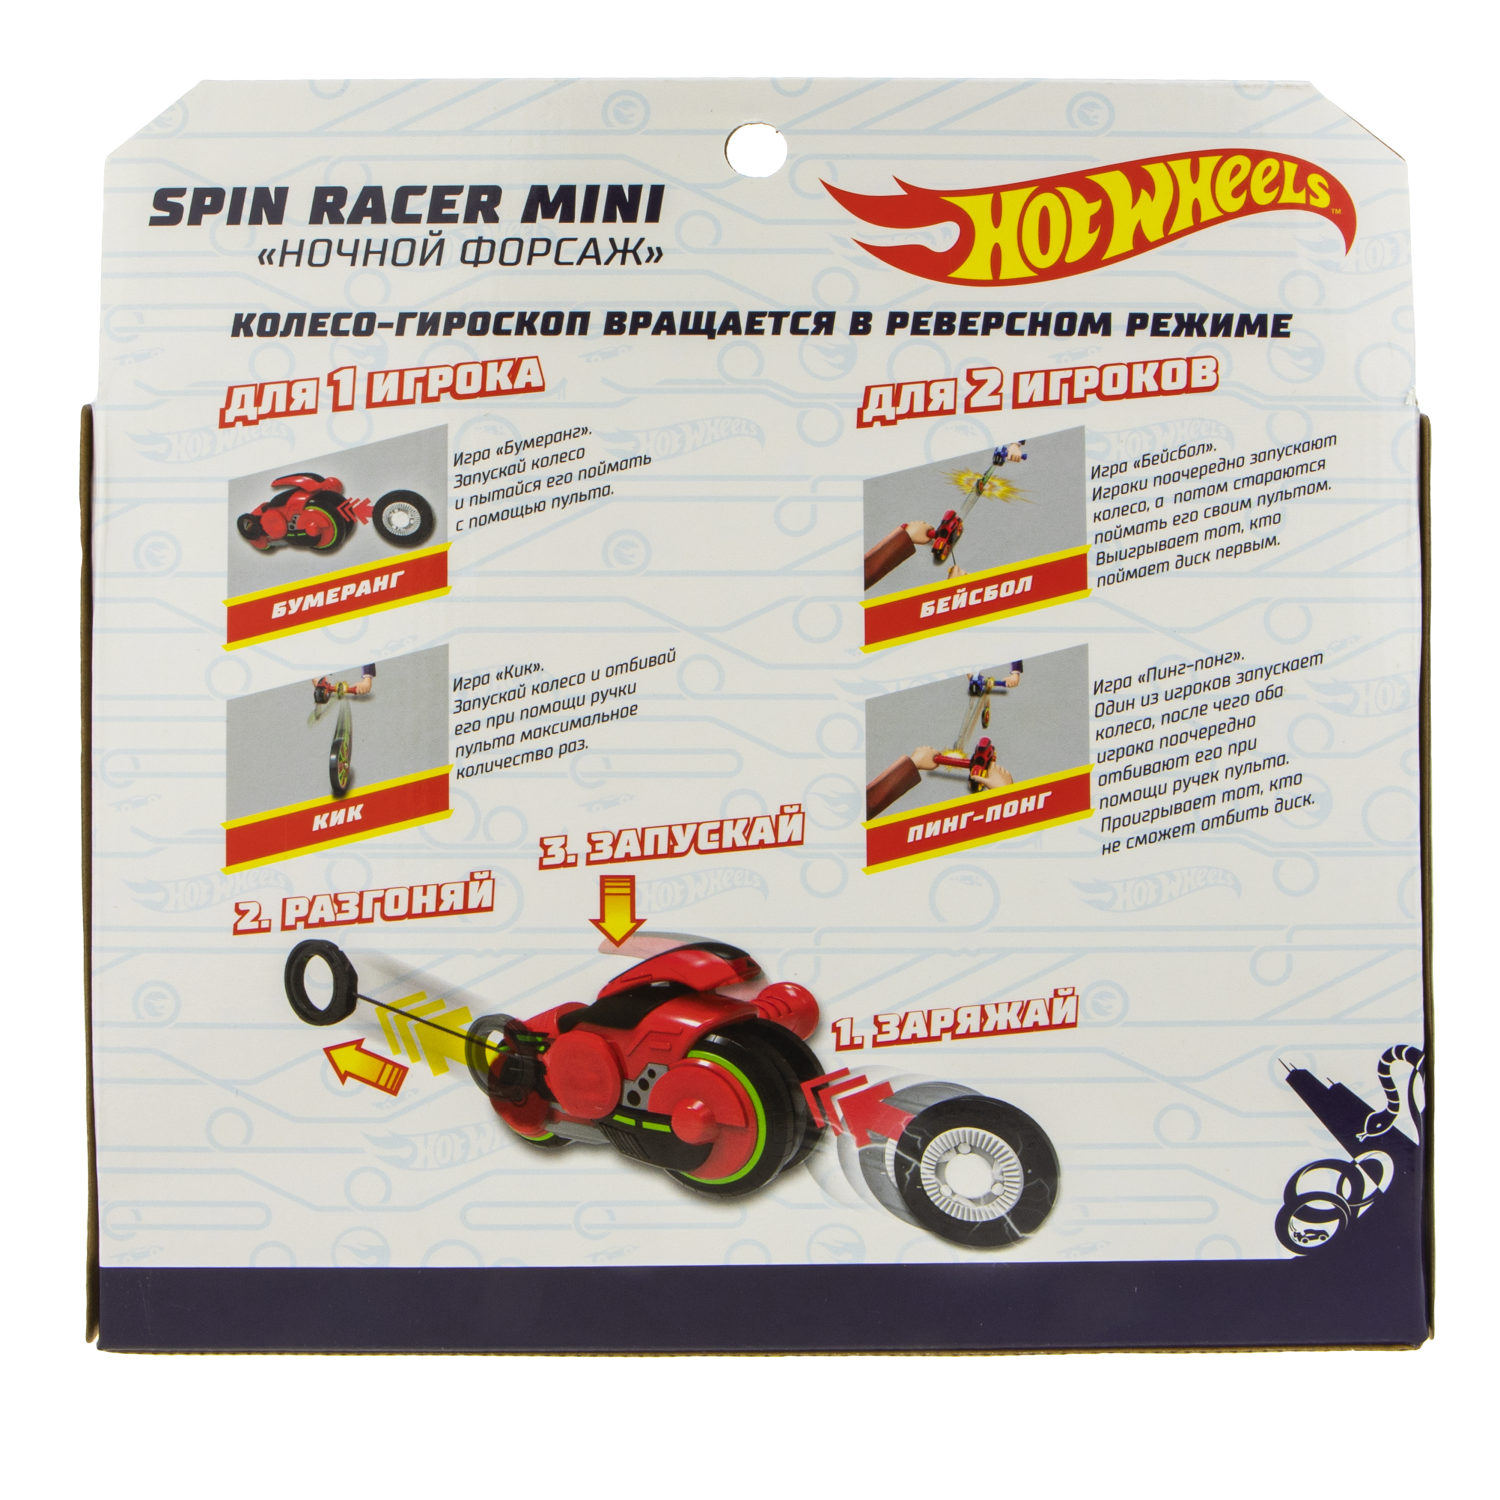 Игровой набор Hot Wheels Spin Racer - Рыжий Ягуар  